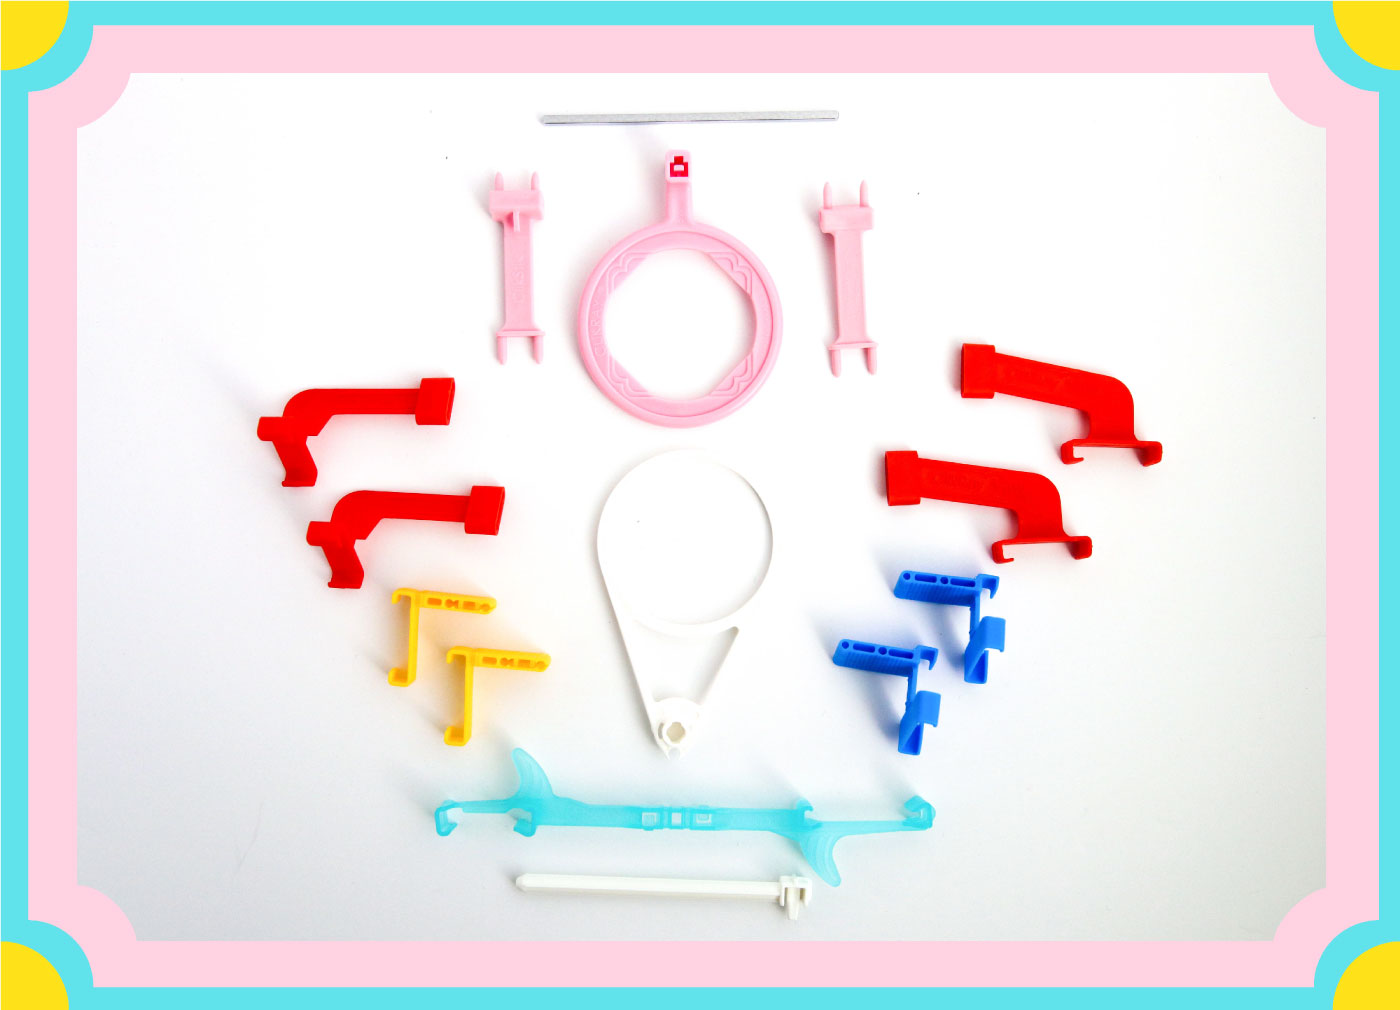 Dental Sensor Accessories in a Kit